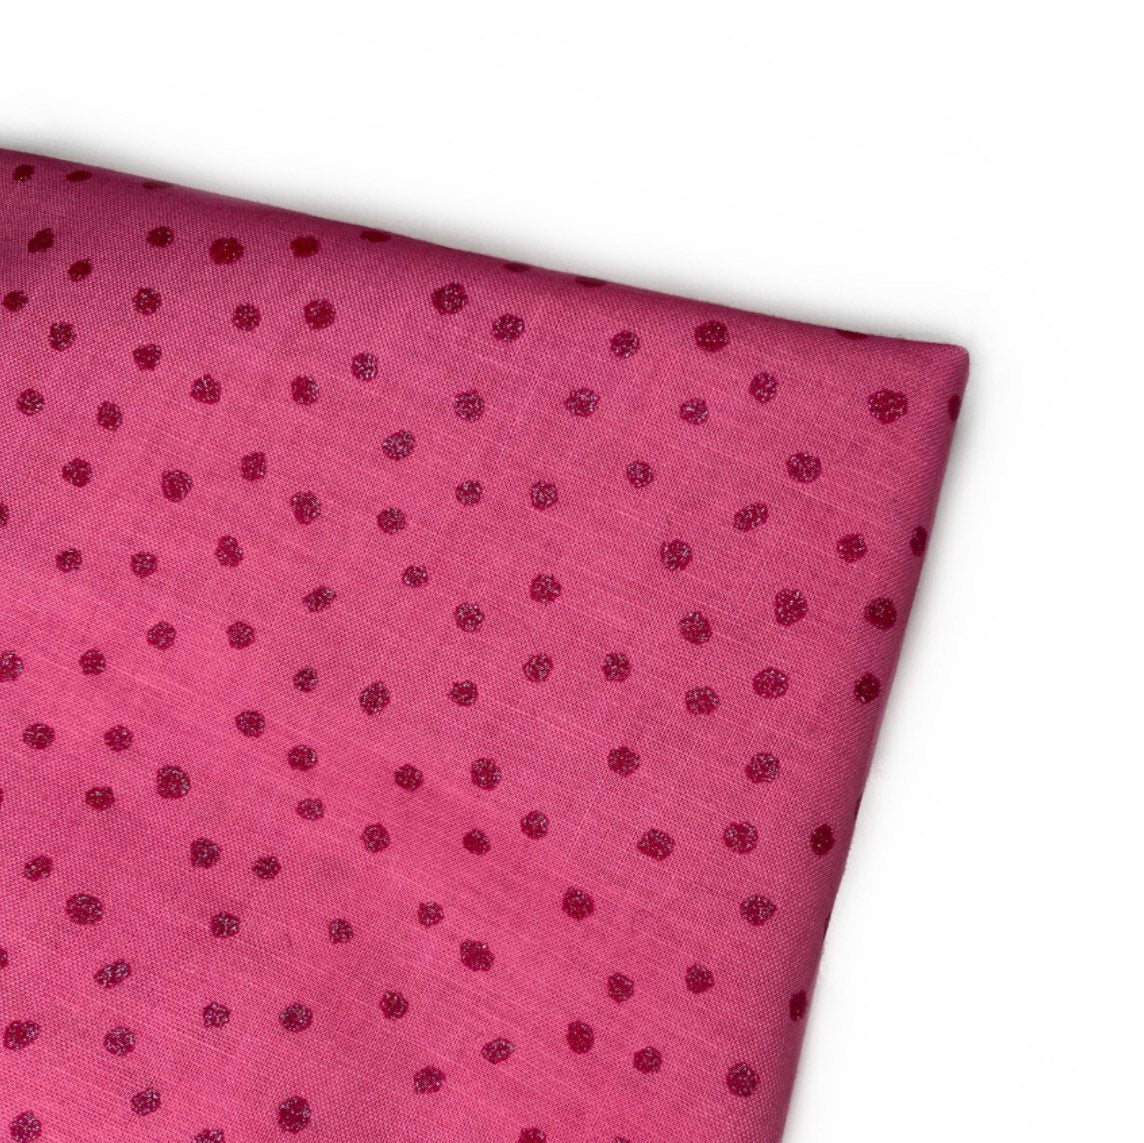 Quilting Cotton - Sparkle Polka Dot Cotton Print - Pink